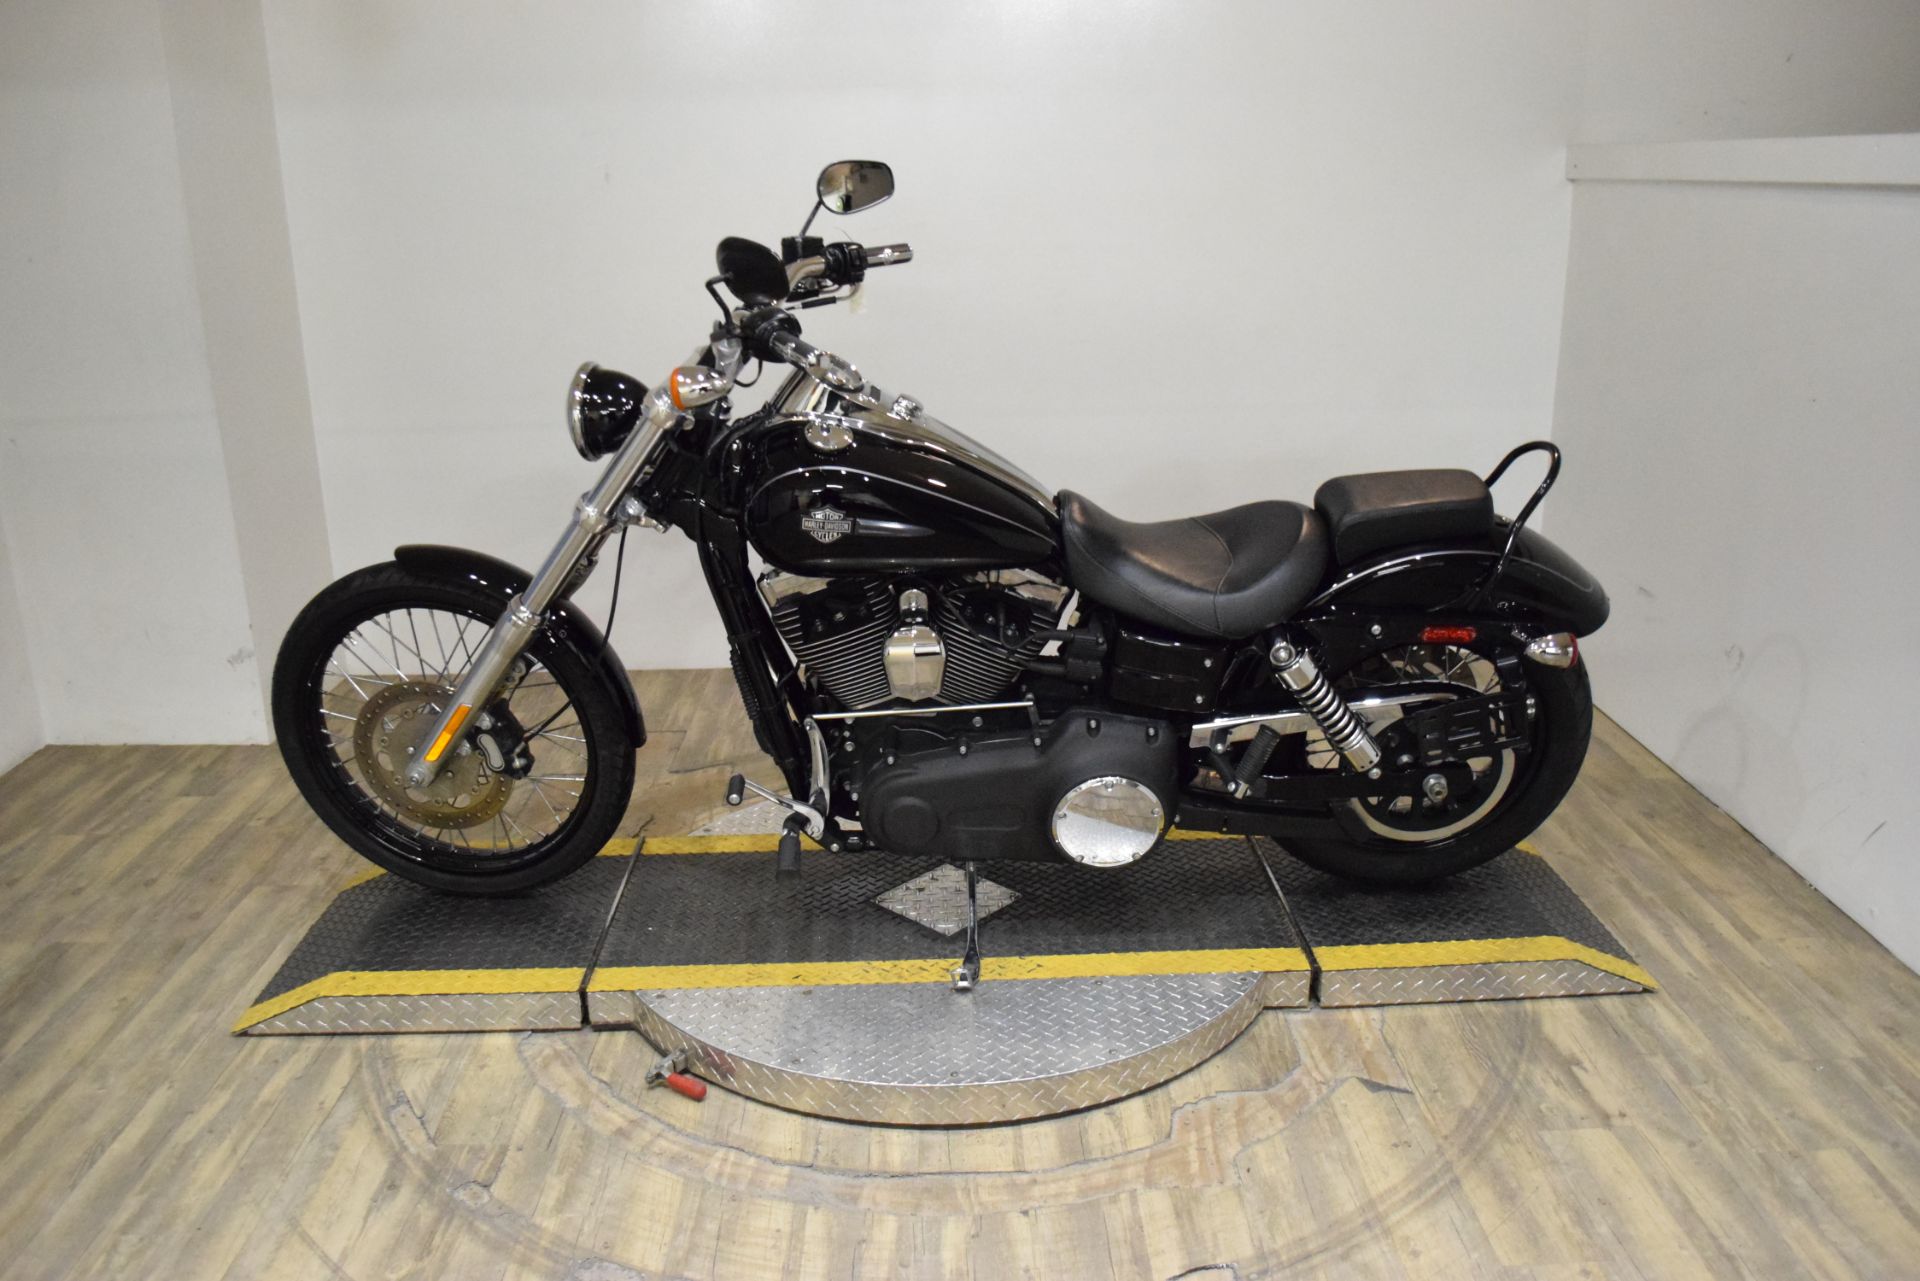 2011 Harley-Davidson Dyna® Wide Glide® in Wauconda, Illinois - Photo 15